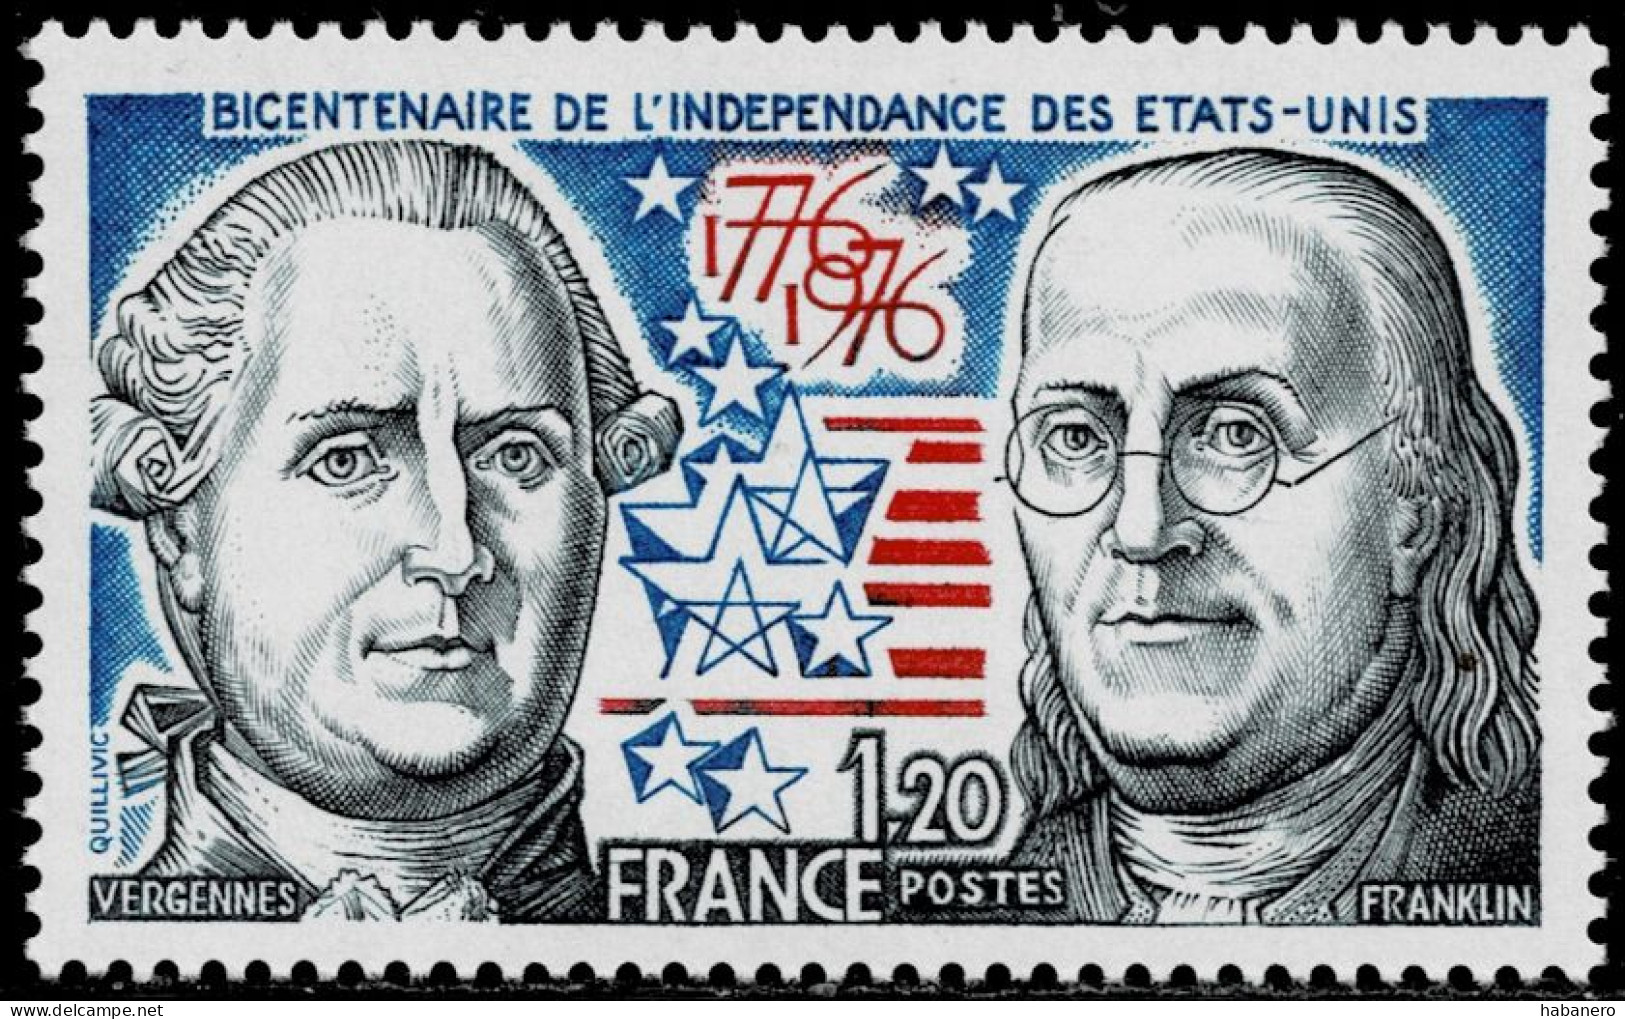 FRANCE 1976 Mi 1963 BICENTENARY OF AMERICAN REVOLUTION MINT STAMP ** - Unabhängigkeit USA